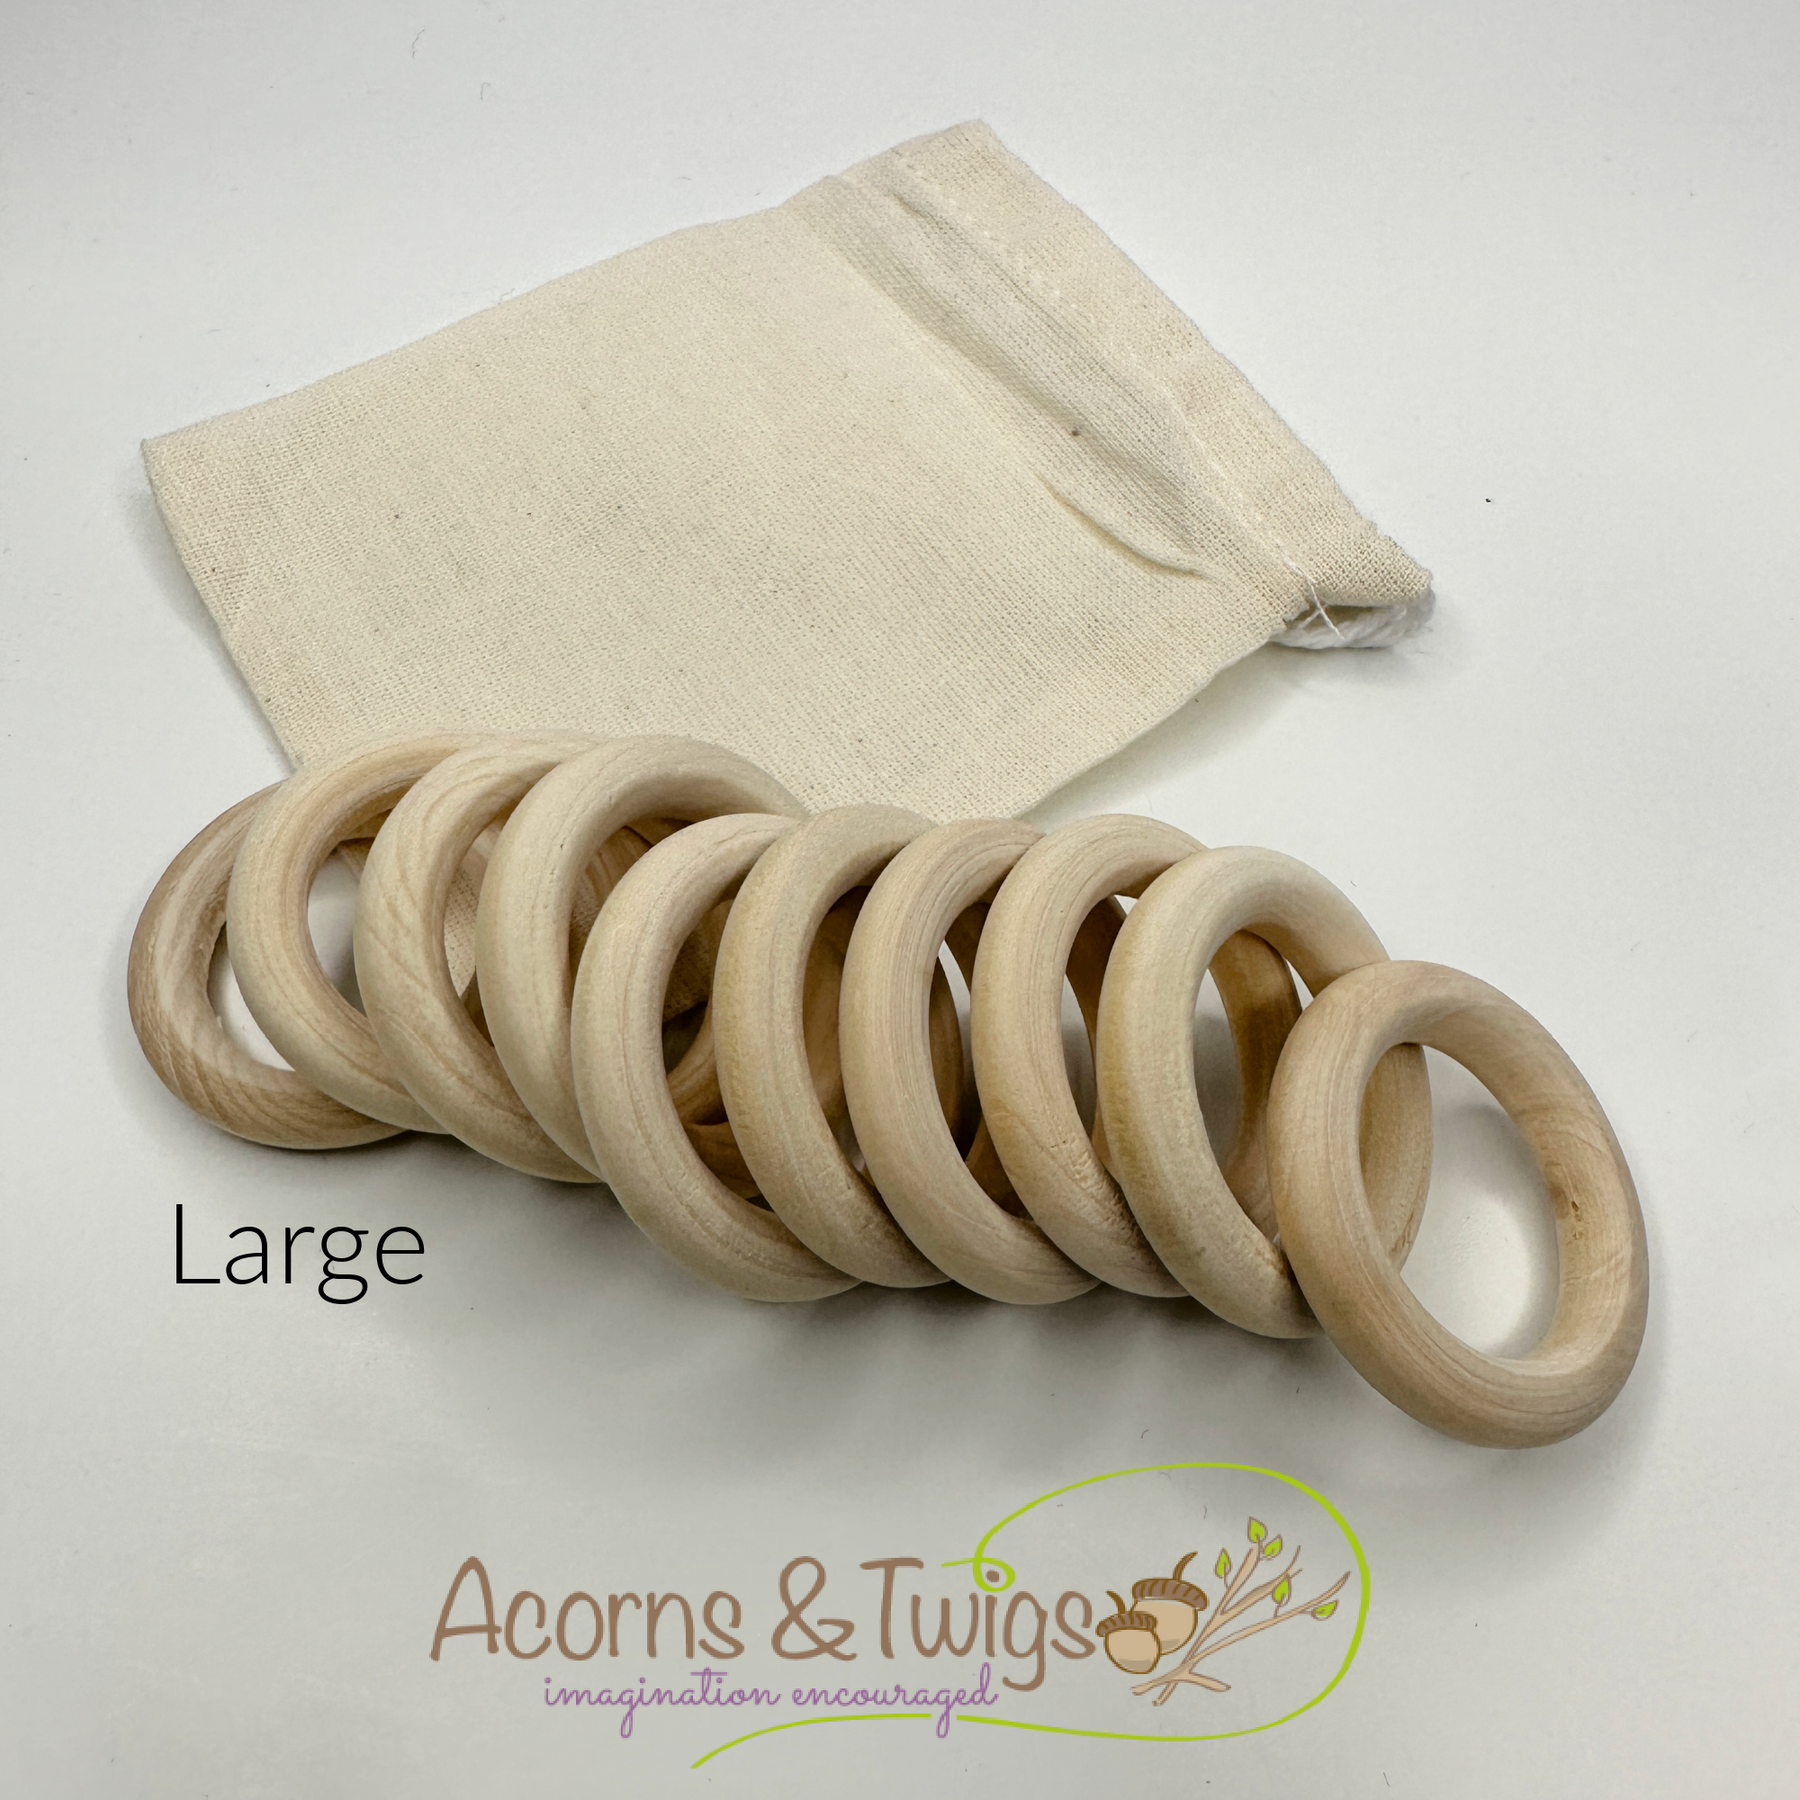 Wooden Rings – Acorns & Twigs